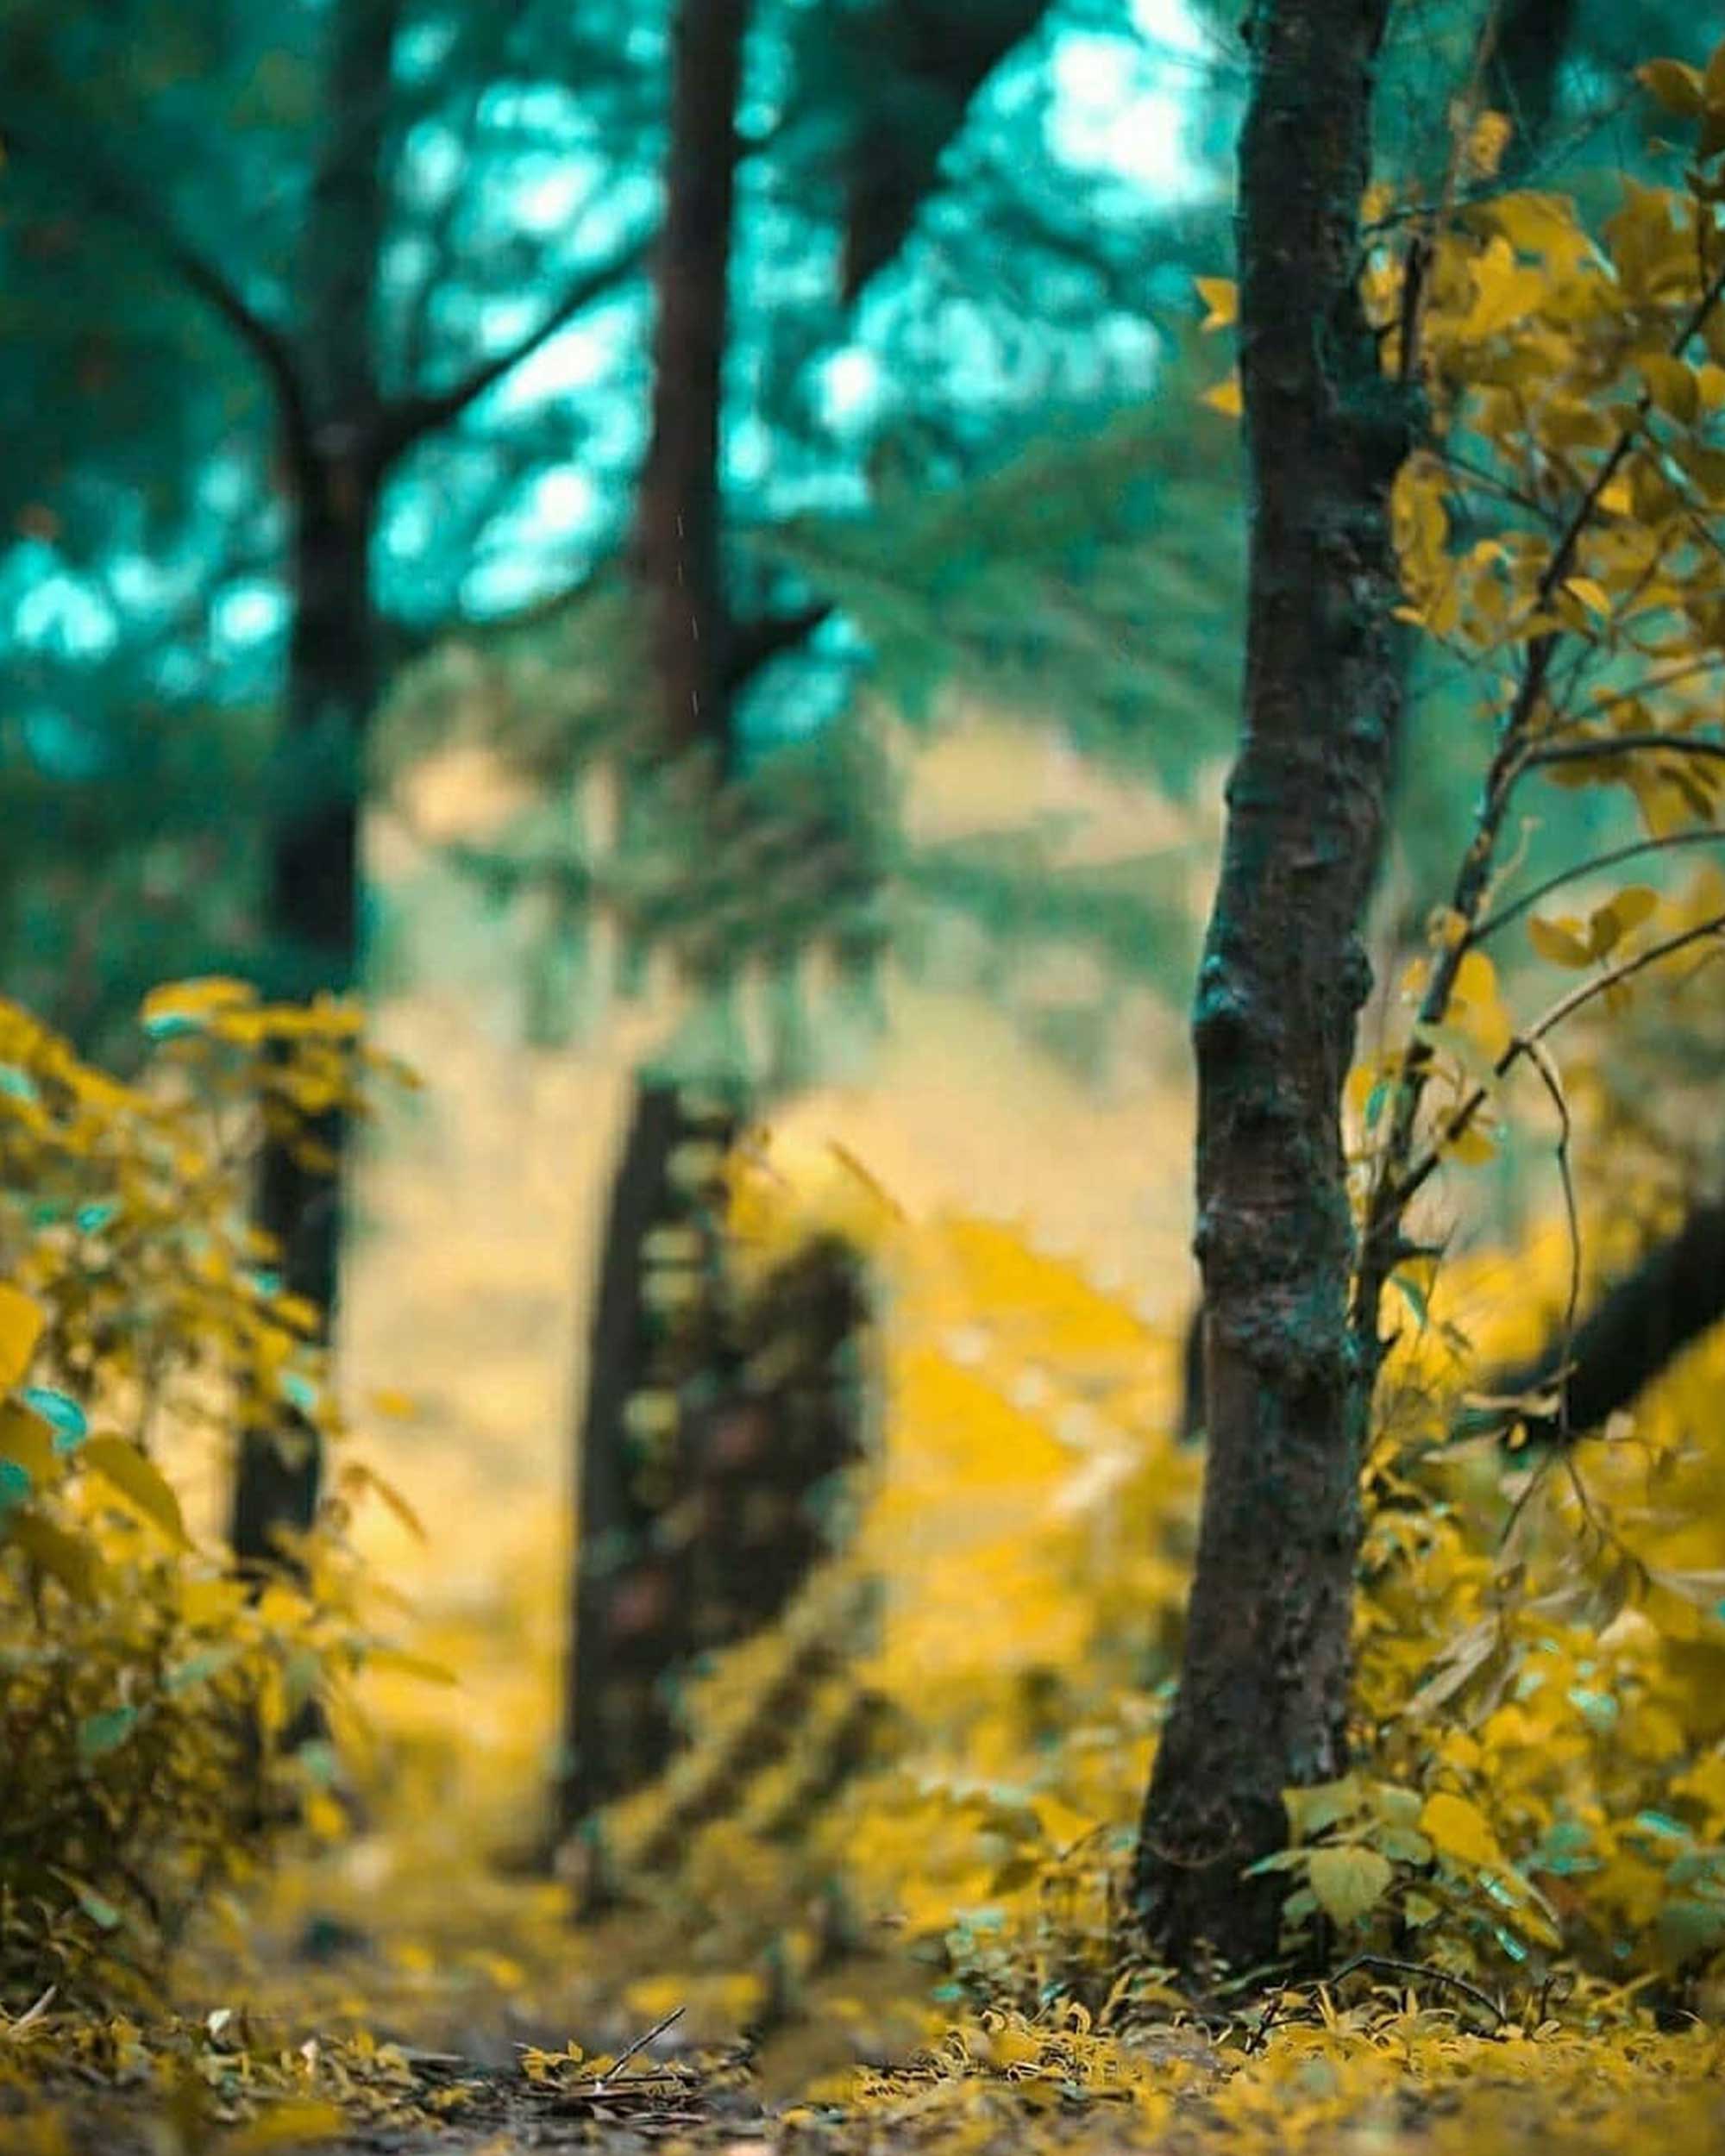 picsart blur background